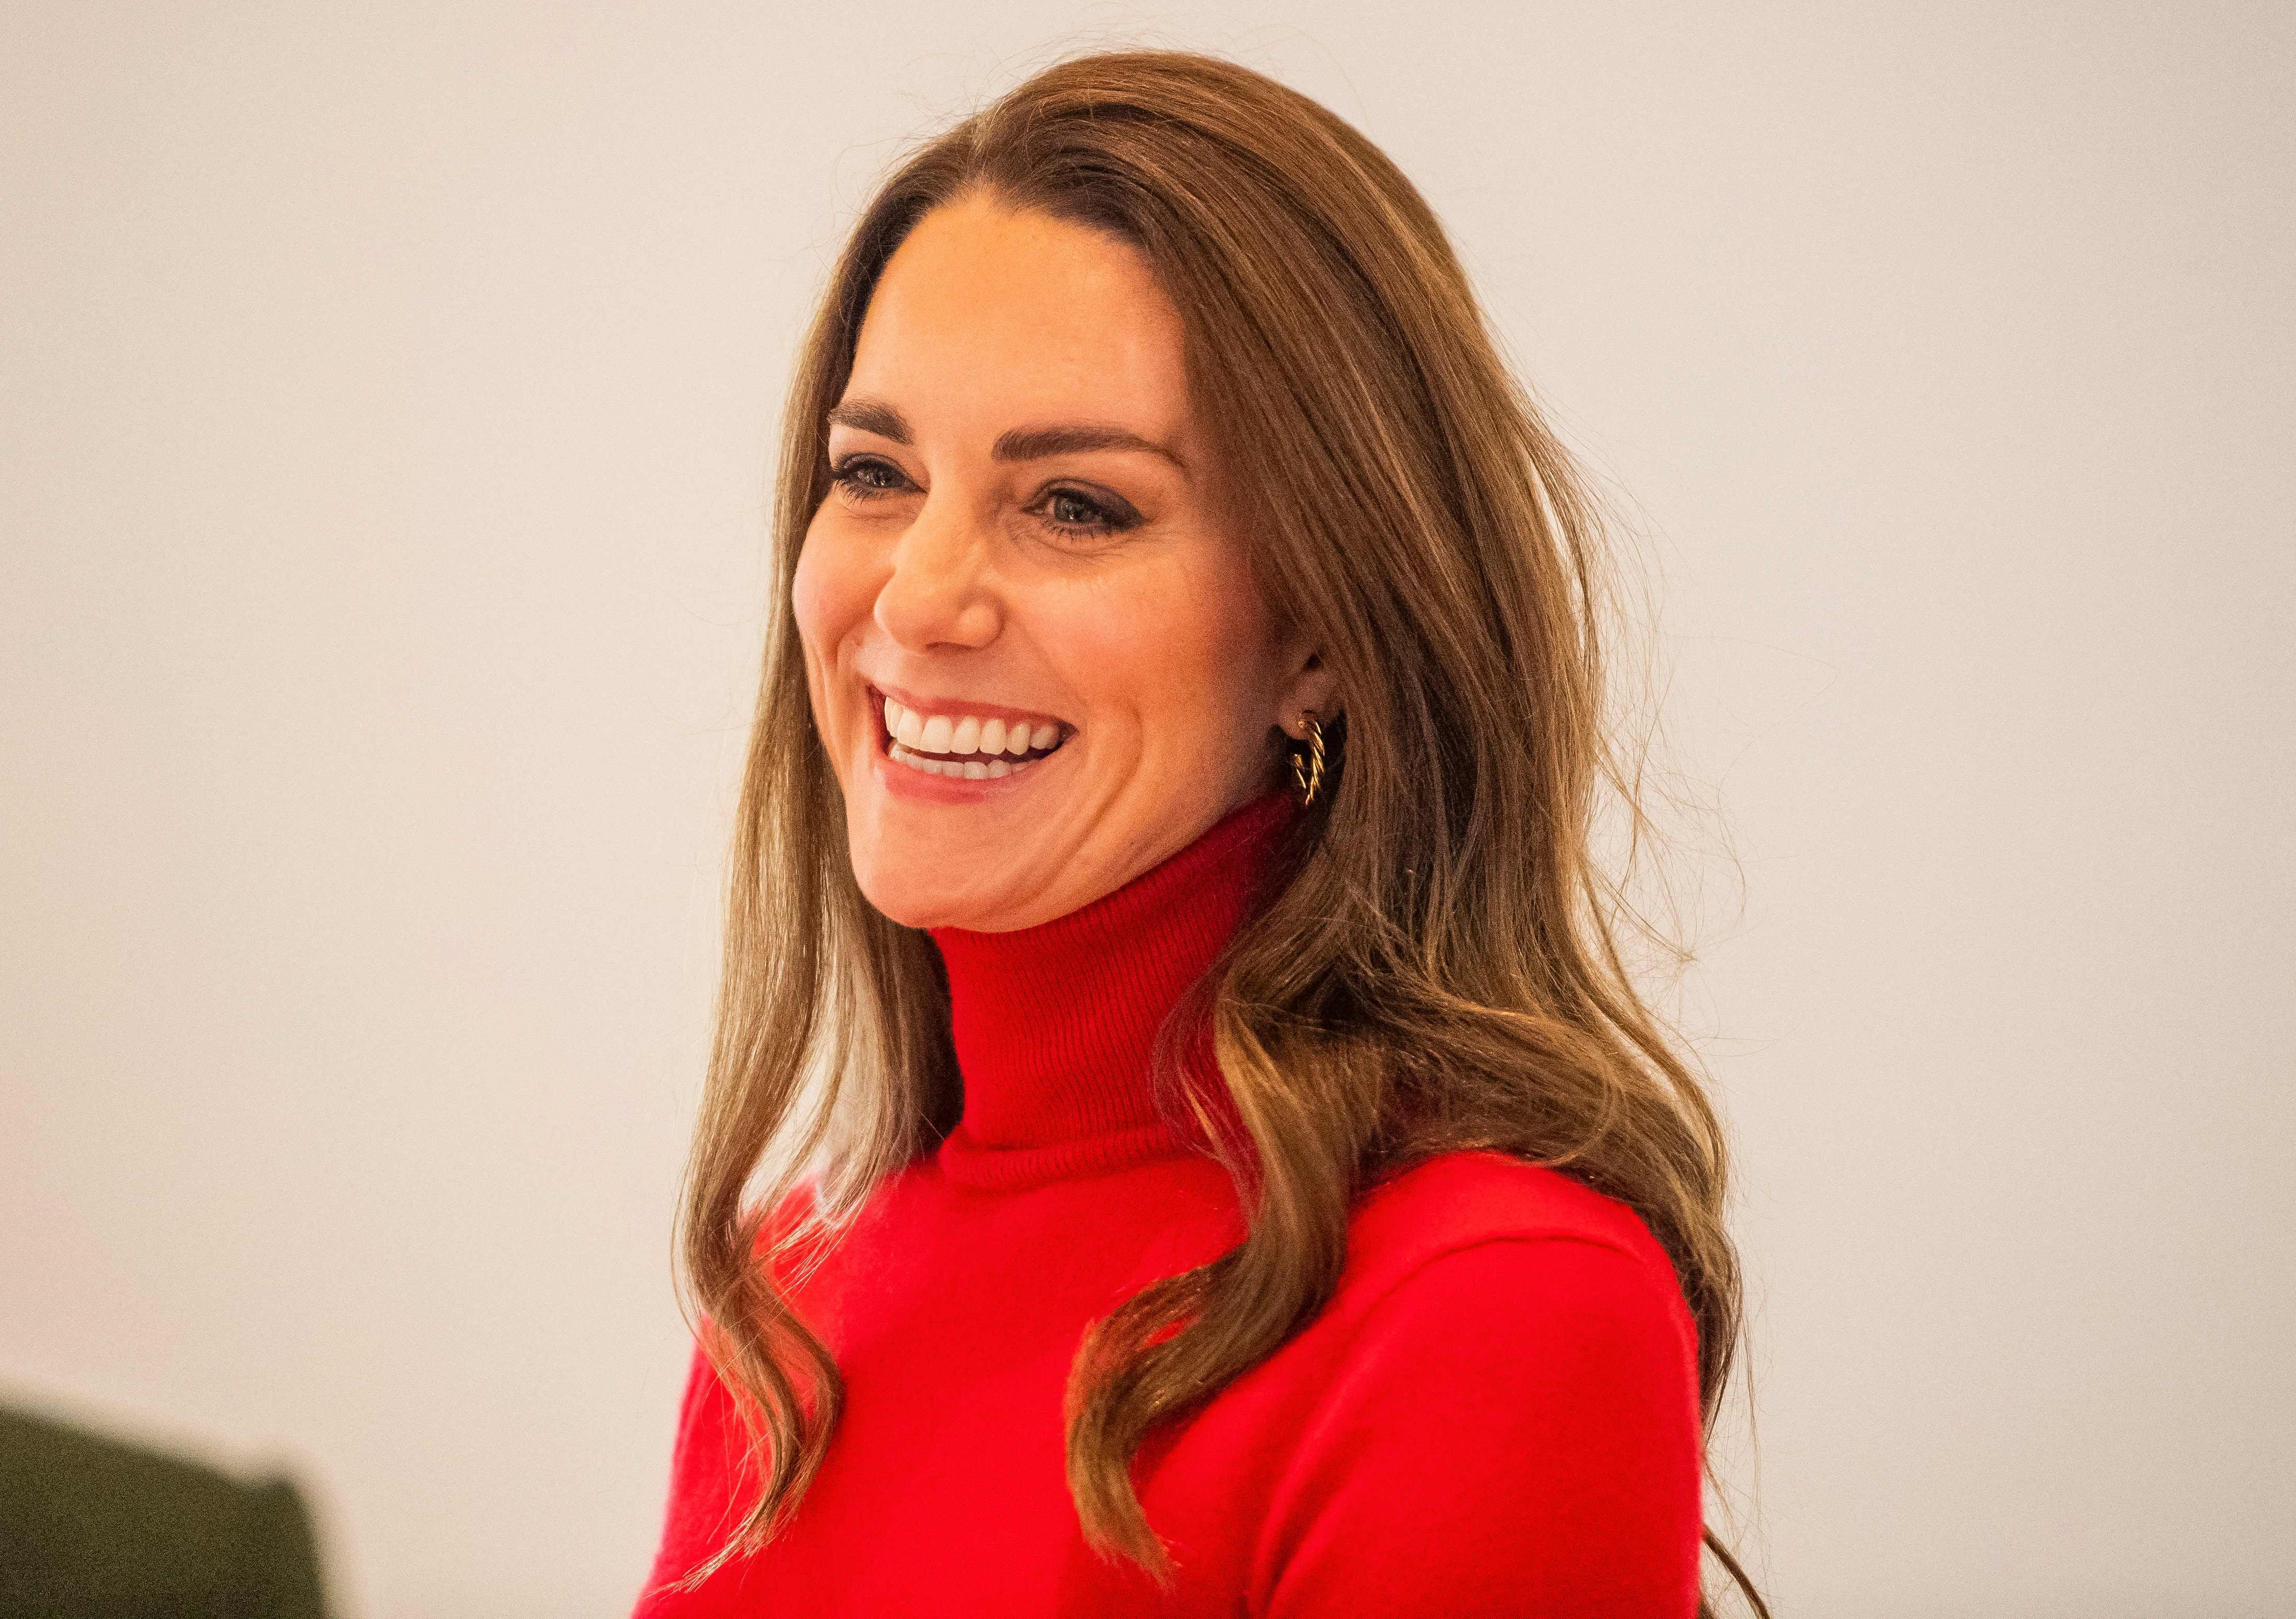 Kate Middleton con look rojo y make up neutro. (Foto: AFP)